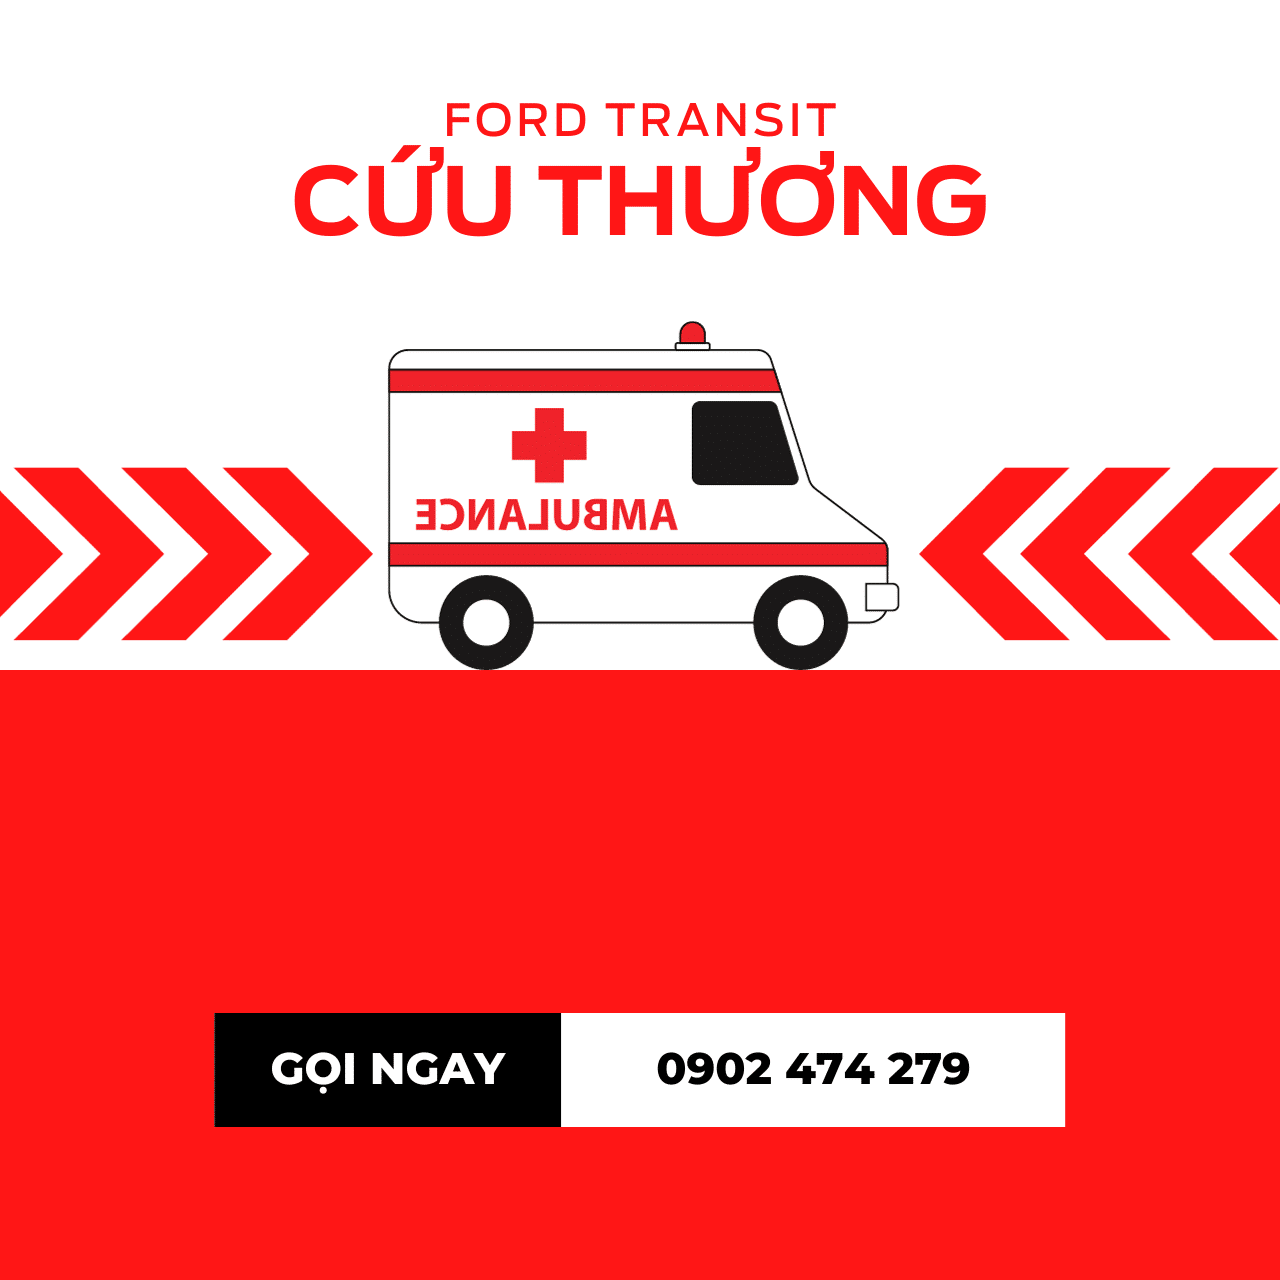 khuye mai ford transit cuu thuong thang 1 - Trang Chủ